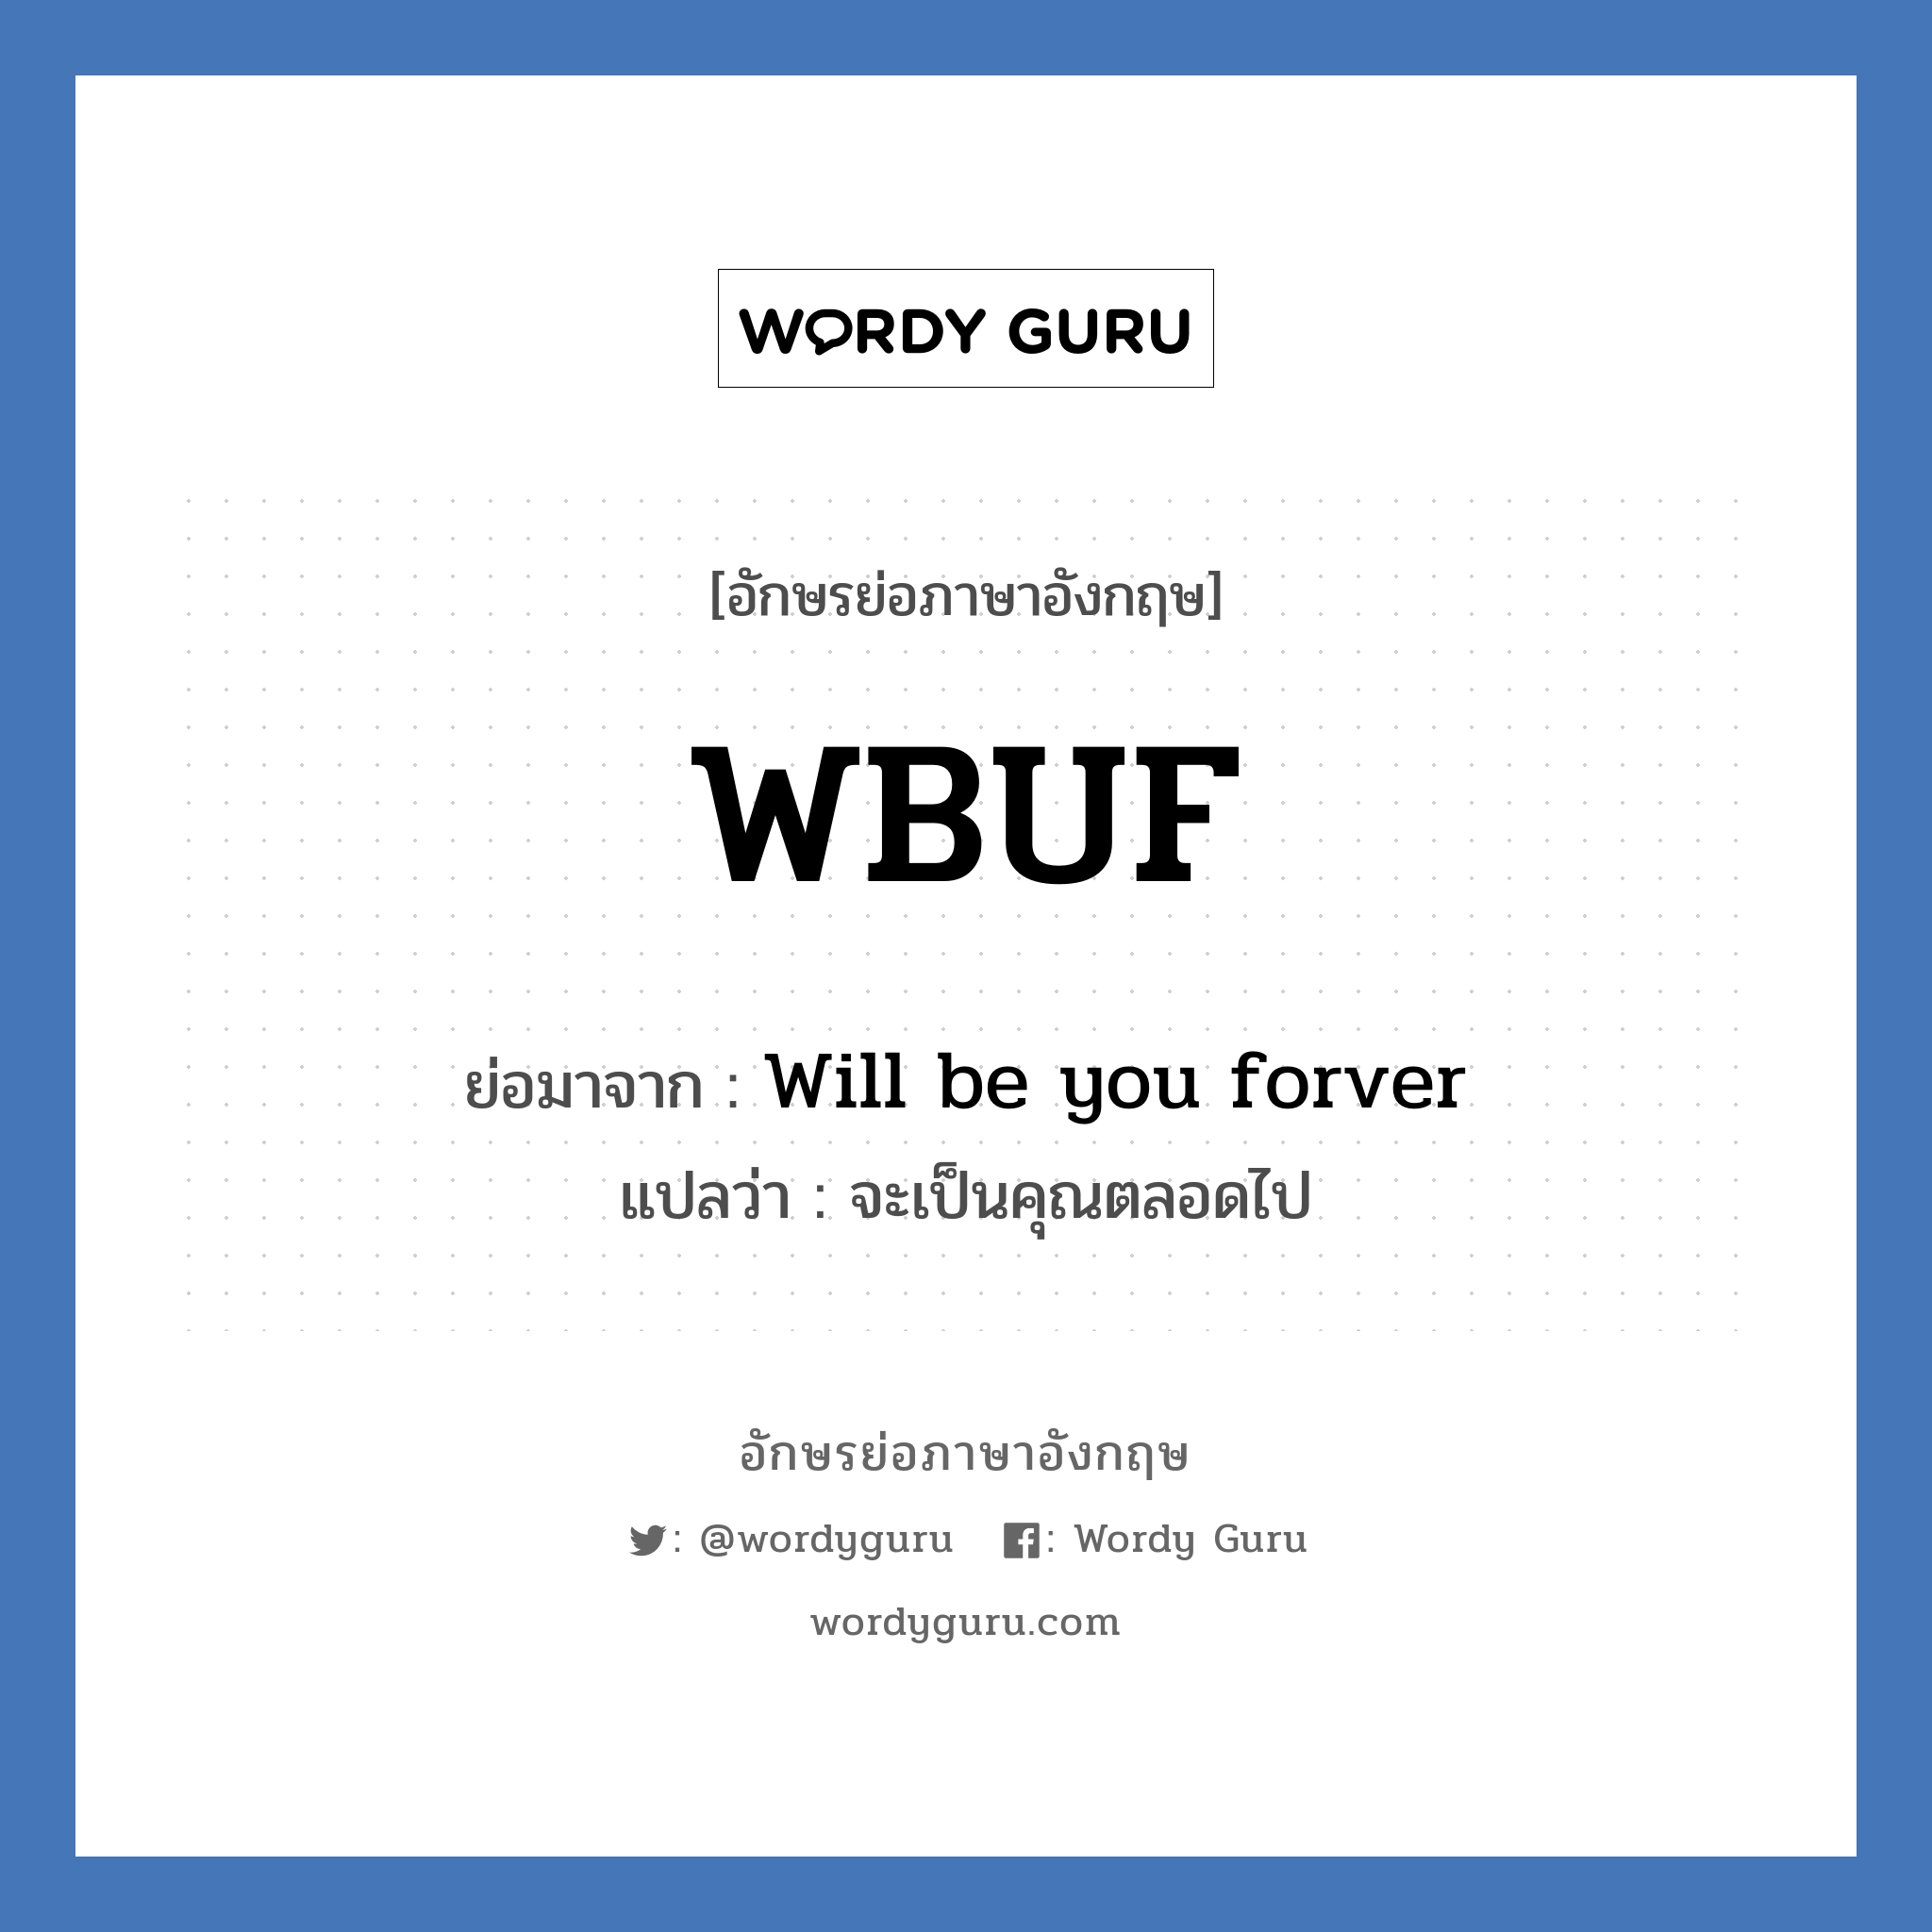 WBUF ย่อมาจาก? แปลว่า?, อักษรย่อภาษาอังกฤษ WBUF ย่อมาจาก Will be you forver แปลว่า จะเป็นคุณตลอดไป